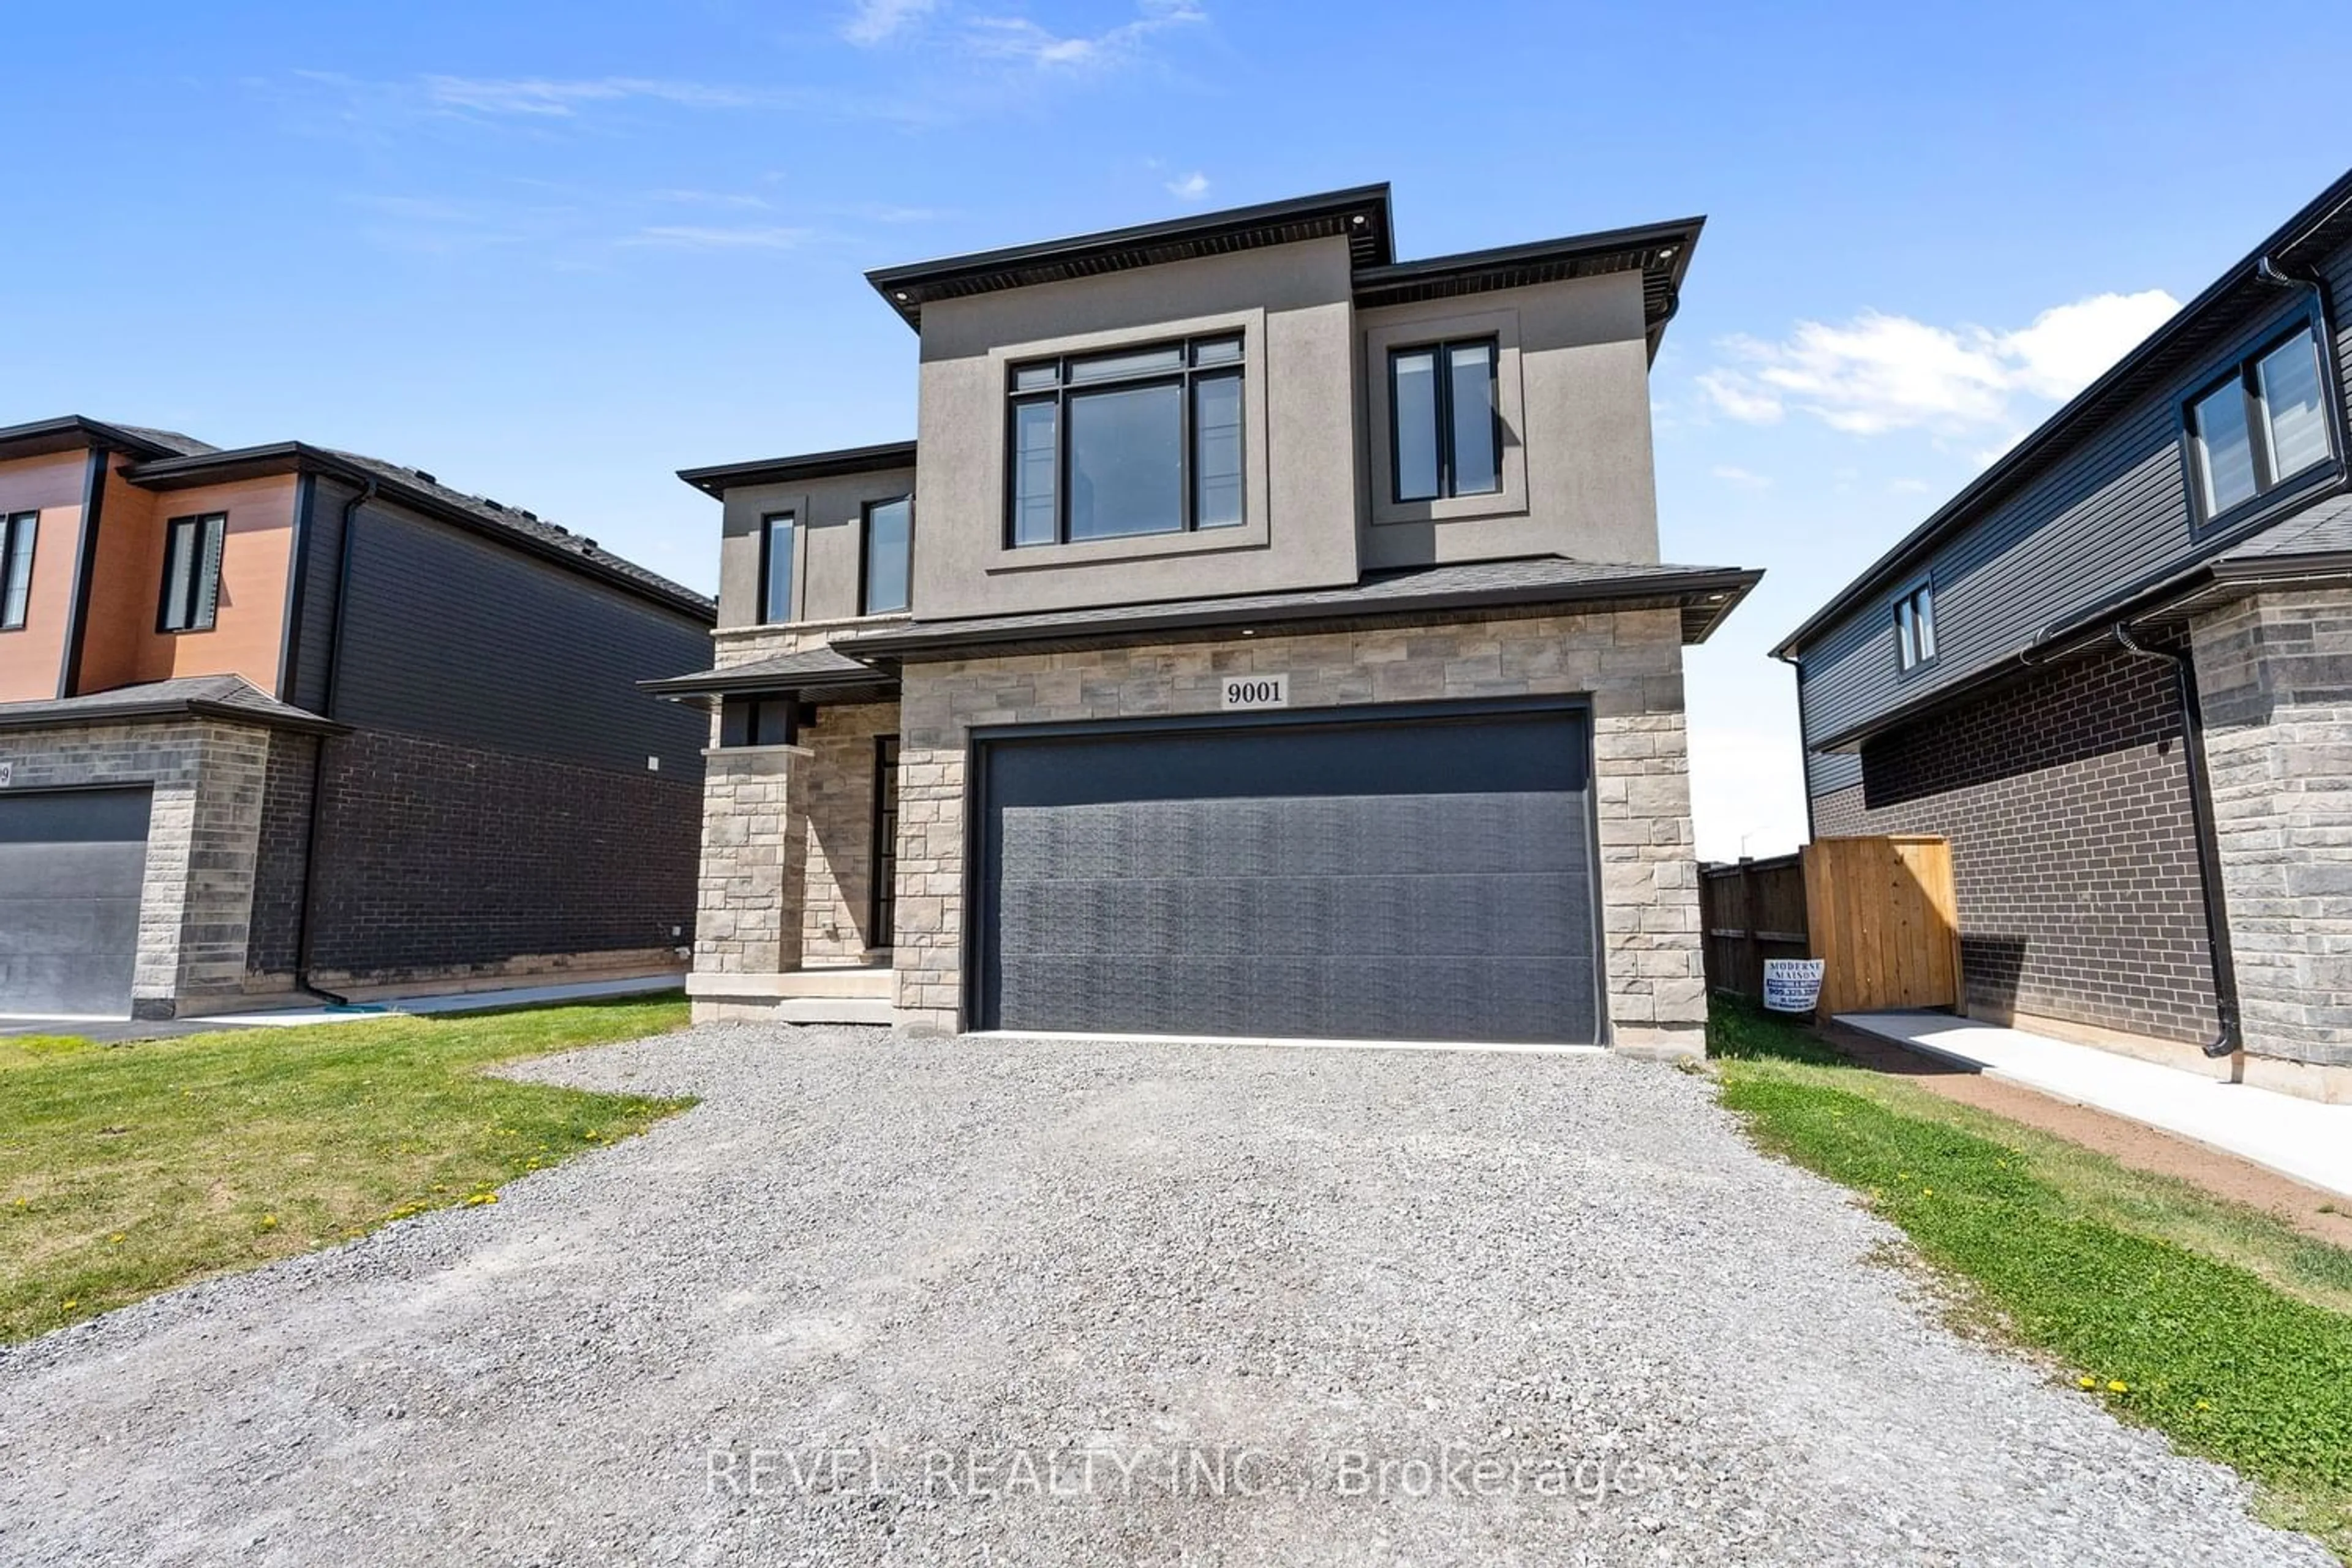 Home with brick exterior material for 9001 Emily Blvd, Niagara Falls Ontario L2H 3T1